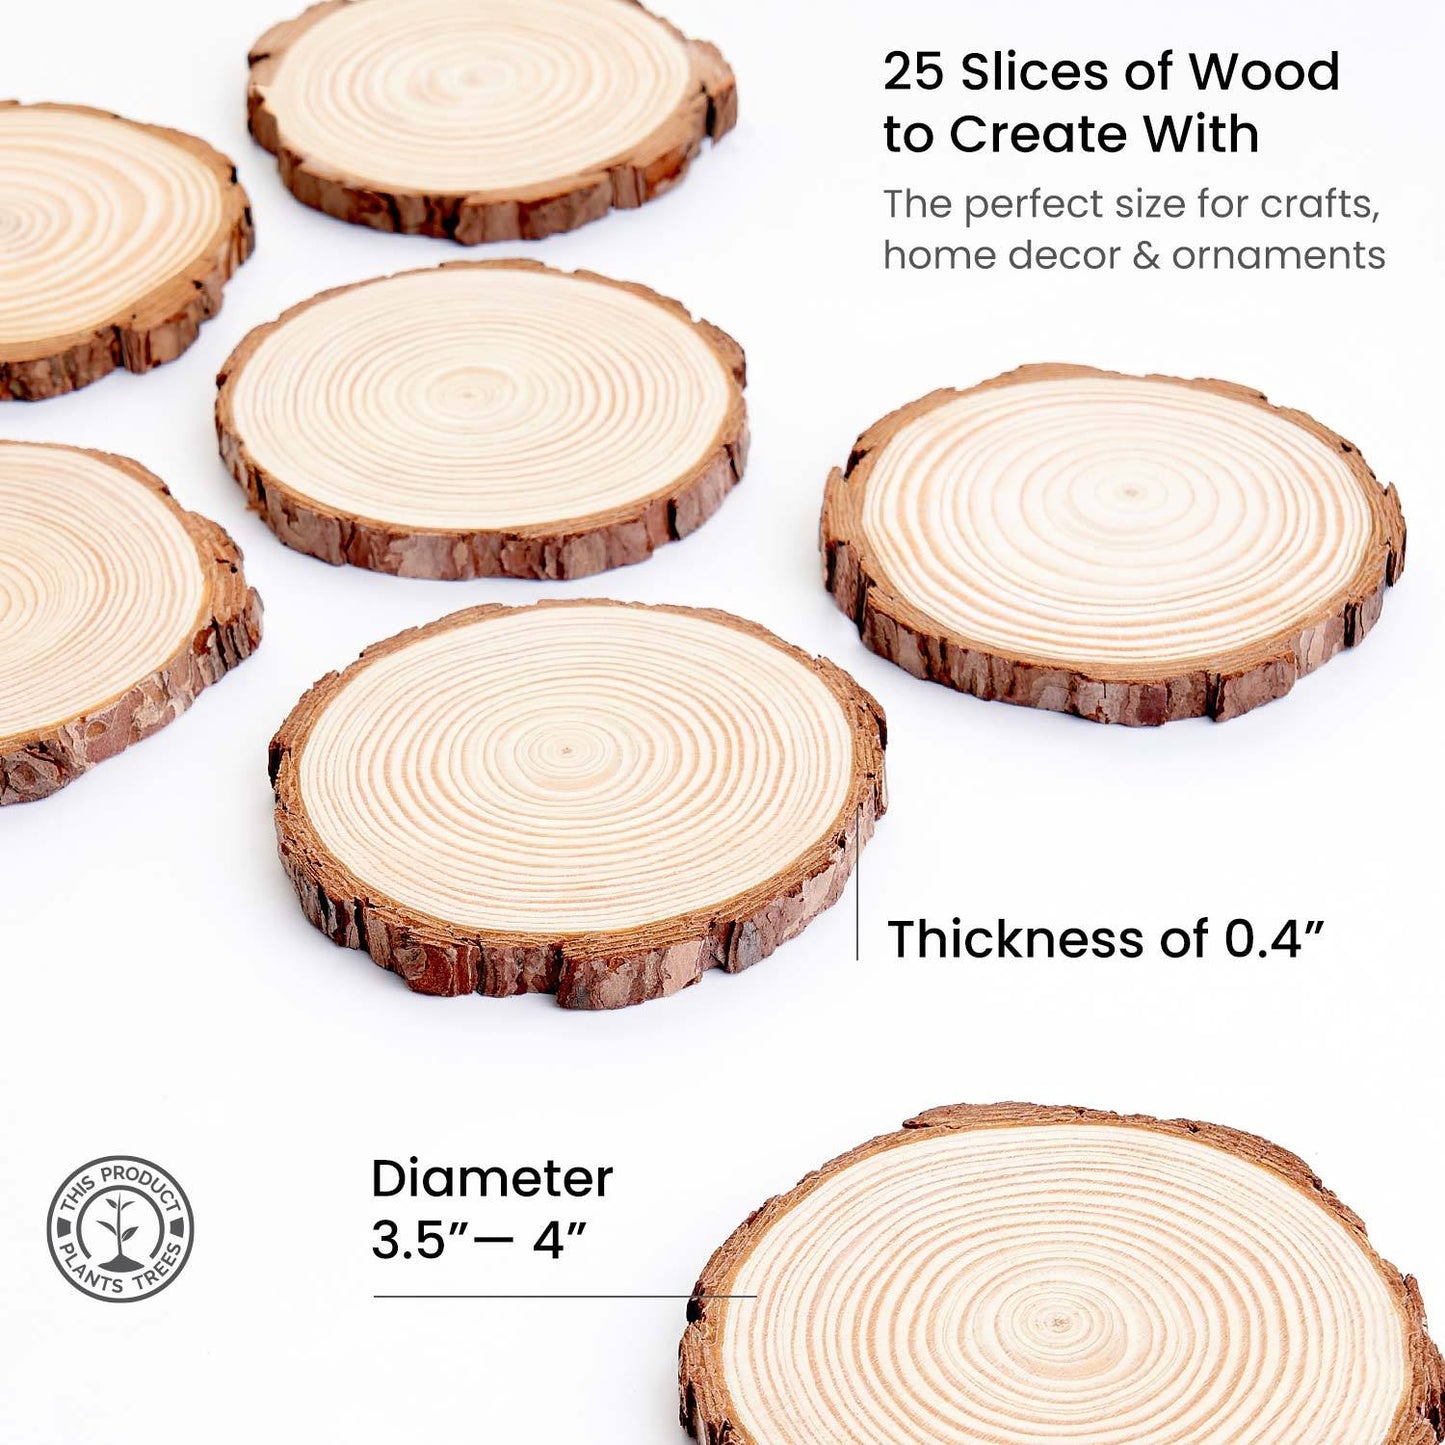 Medium Wood Slices 3.5" to 4"